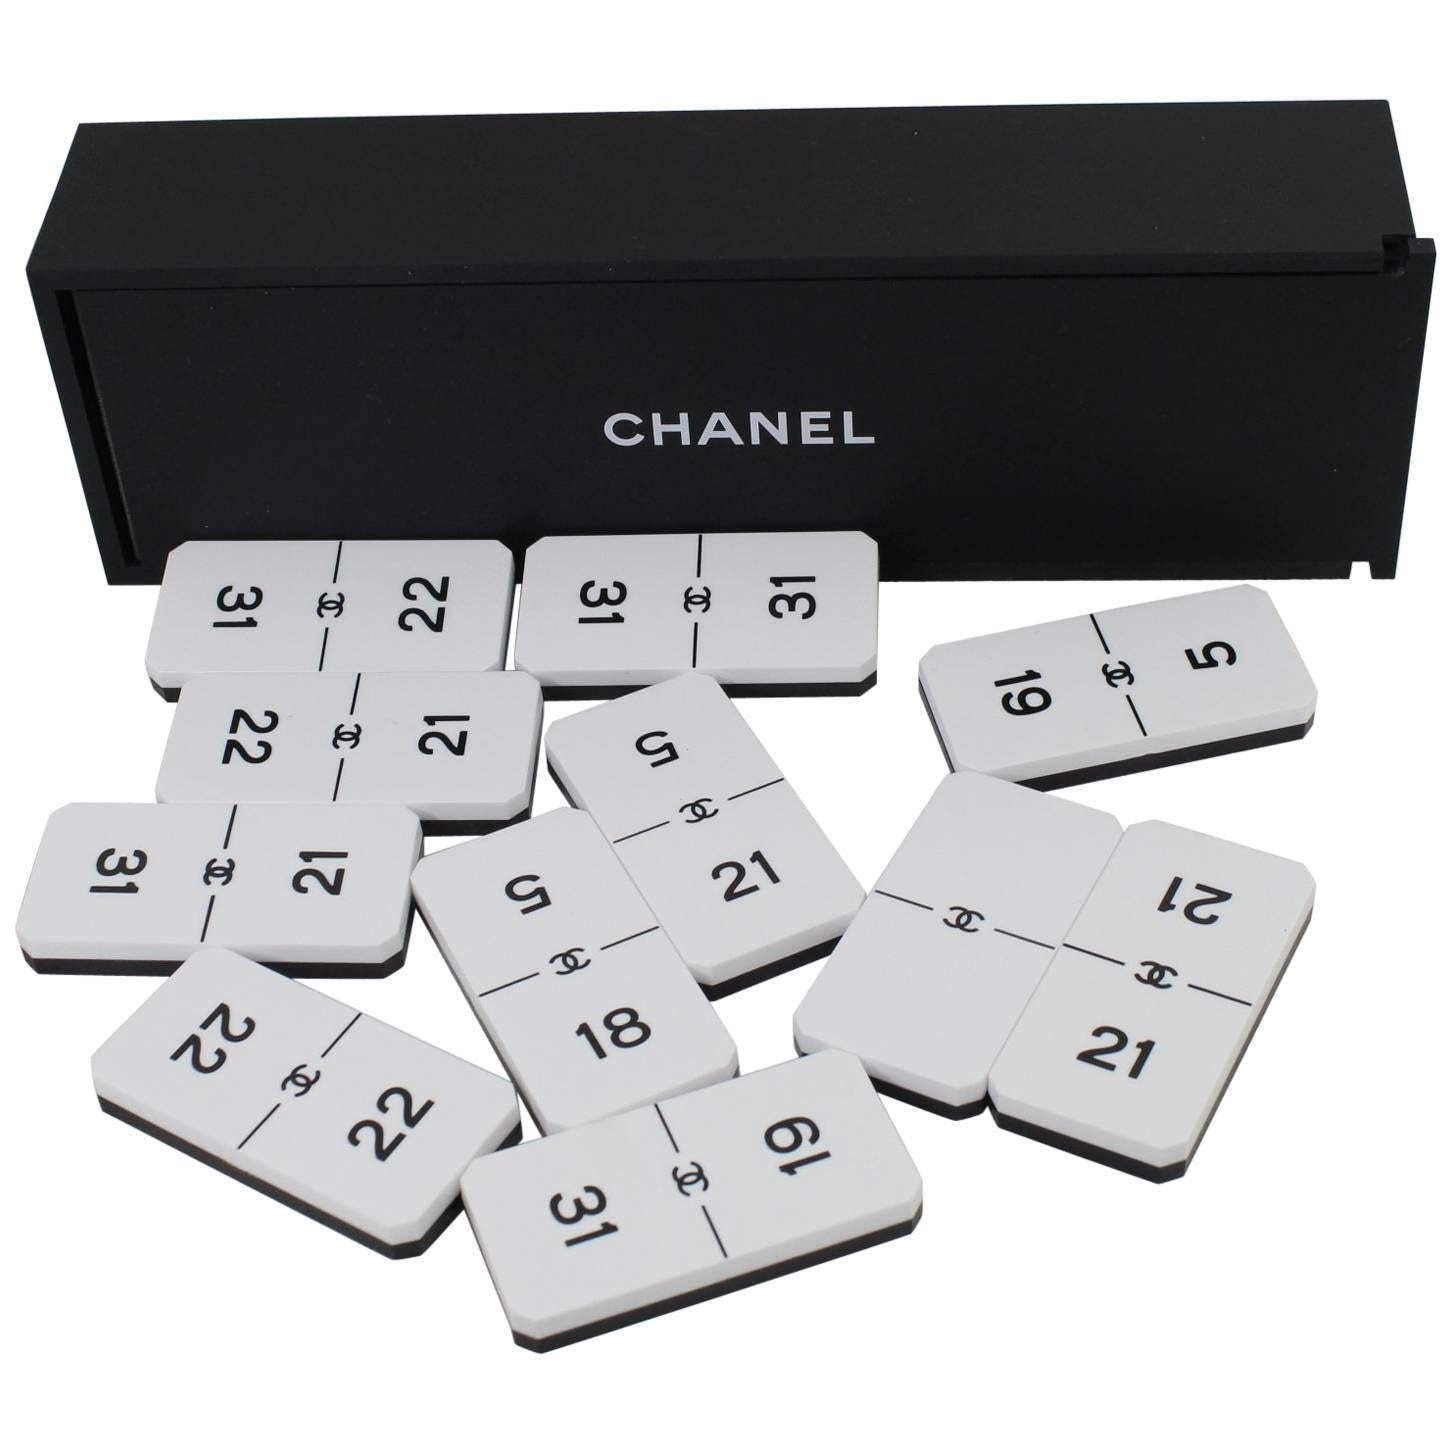 Chanel Domino Set Vip Gift